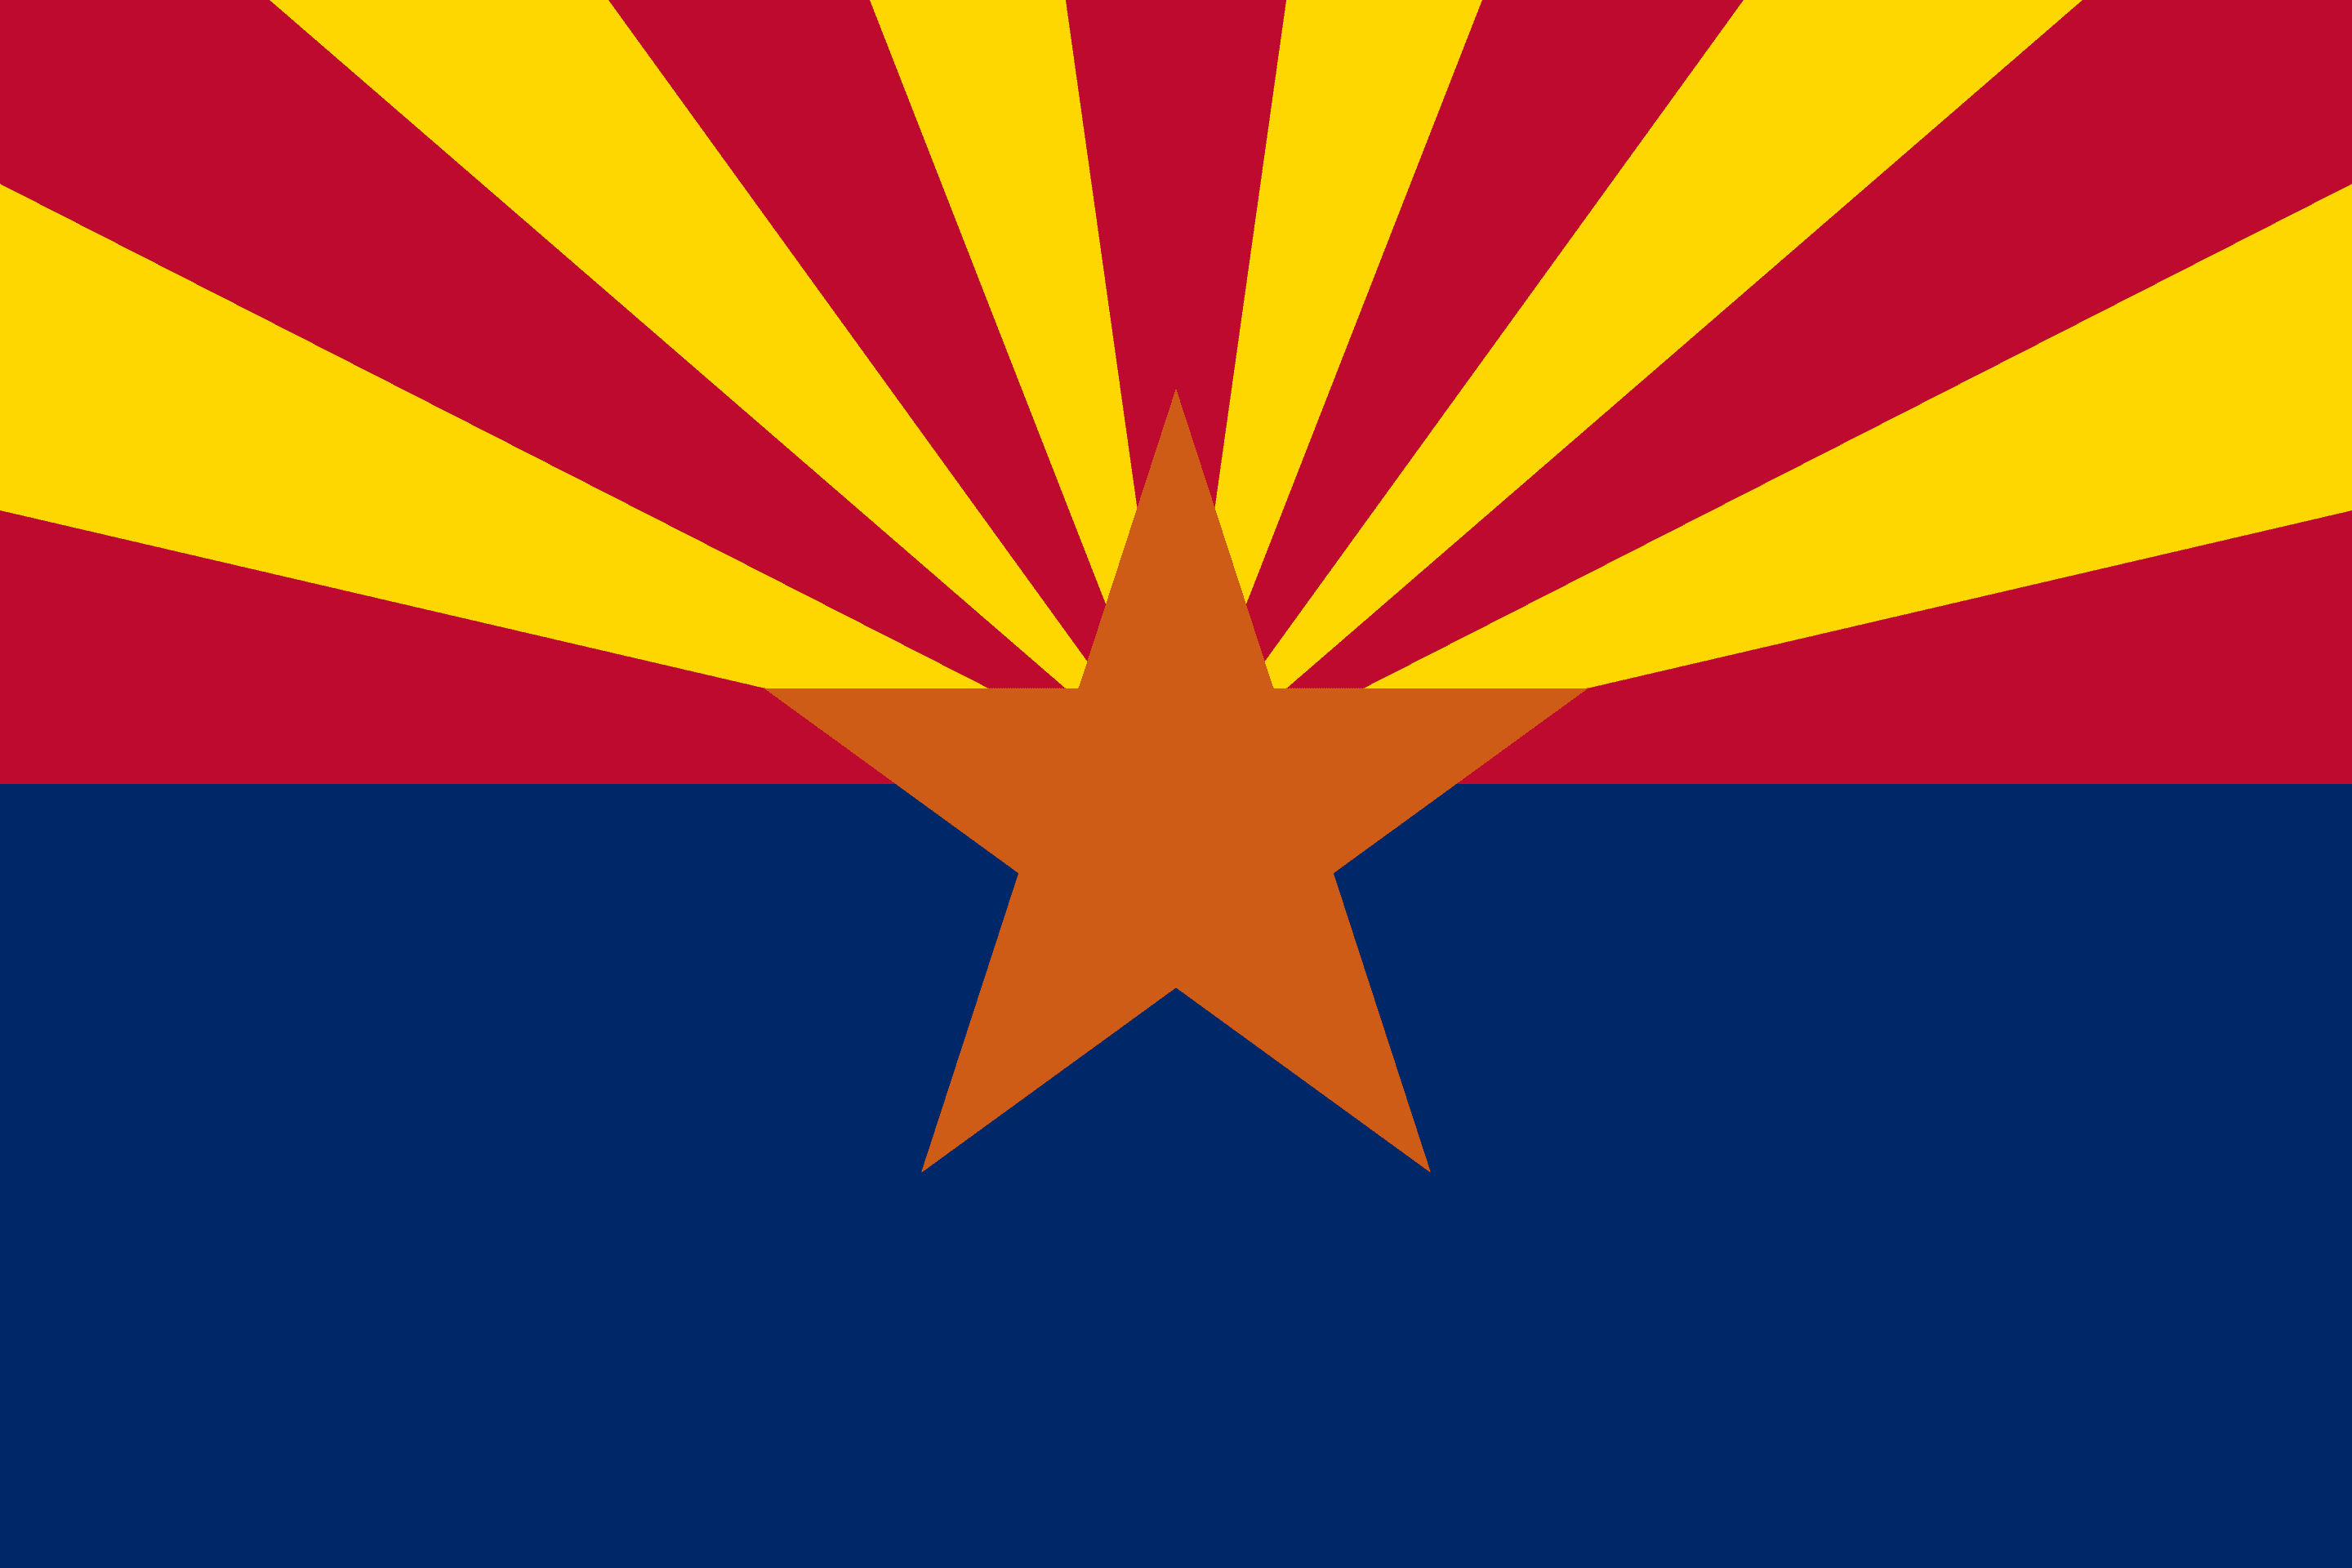 Drone Laws in Arizona